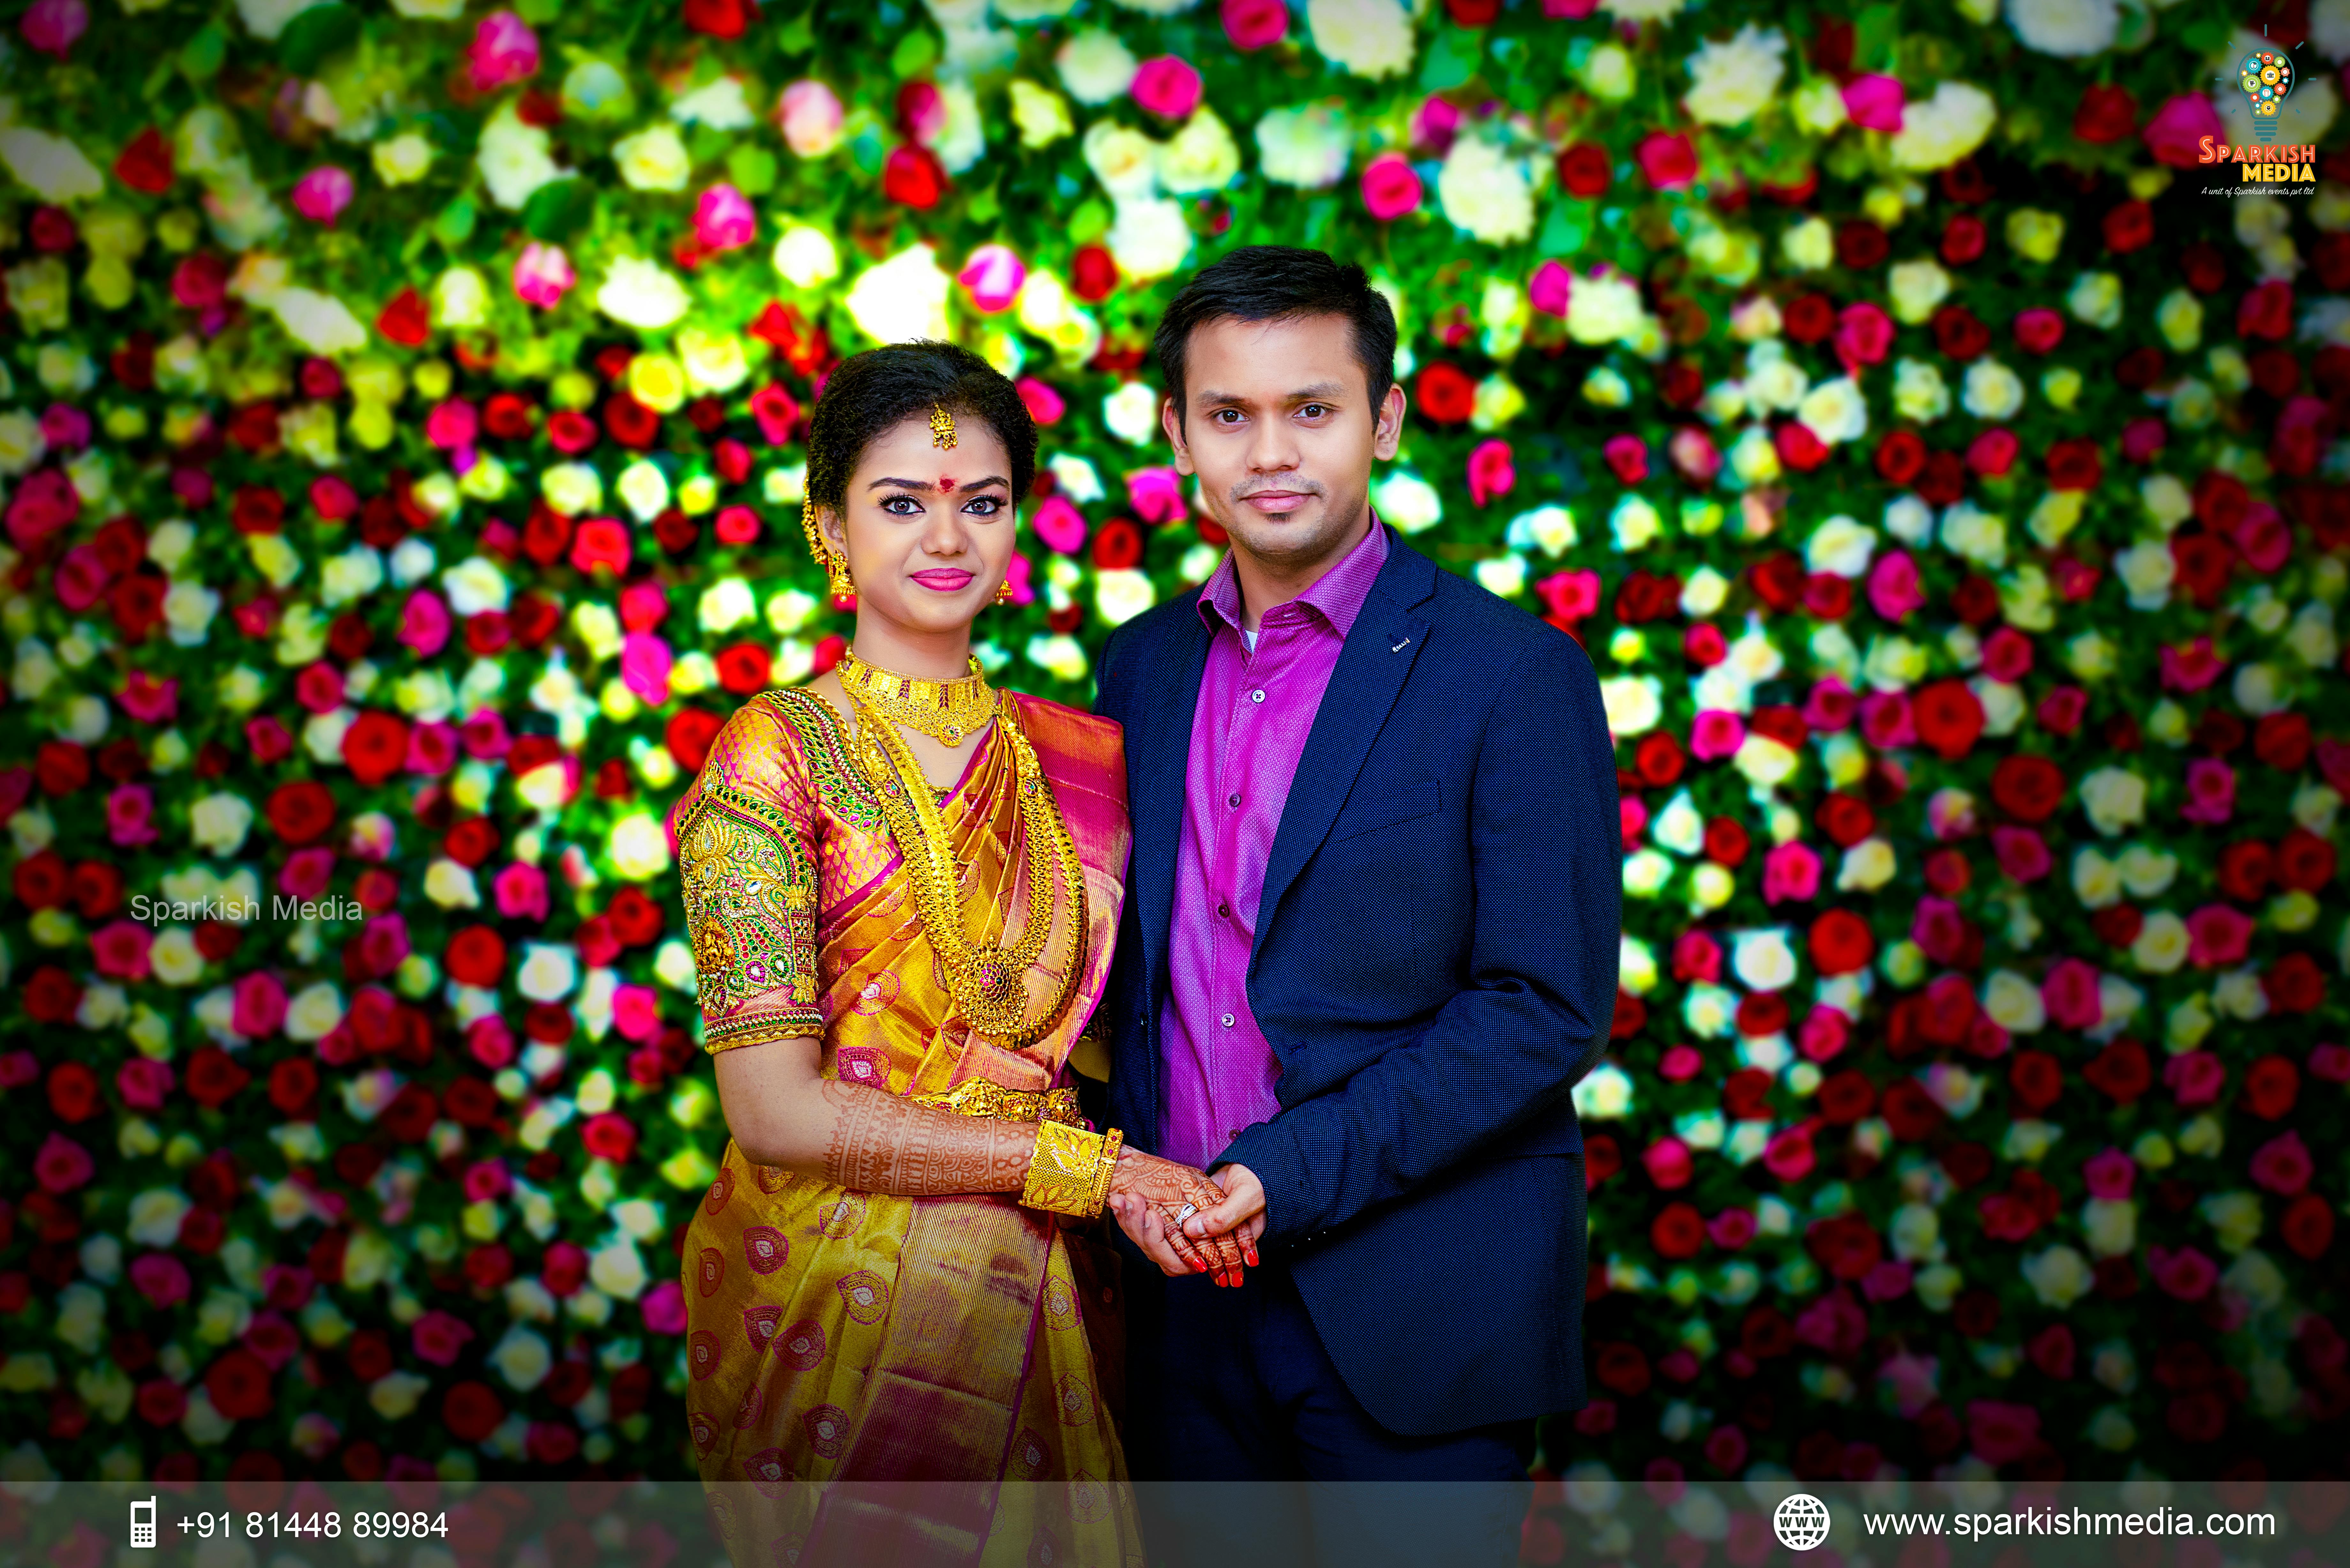 Free stock photo of Wedding photographers in Chennai